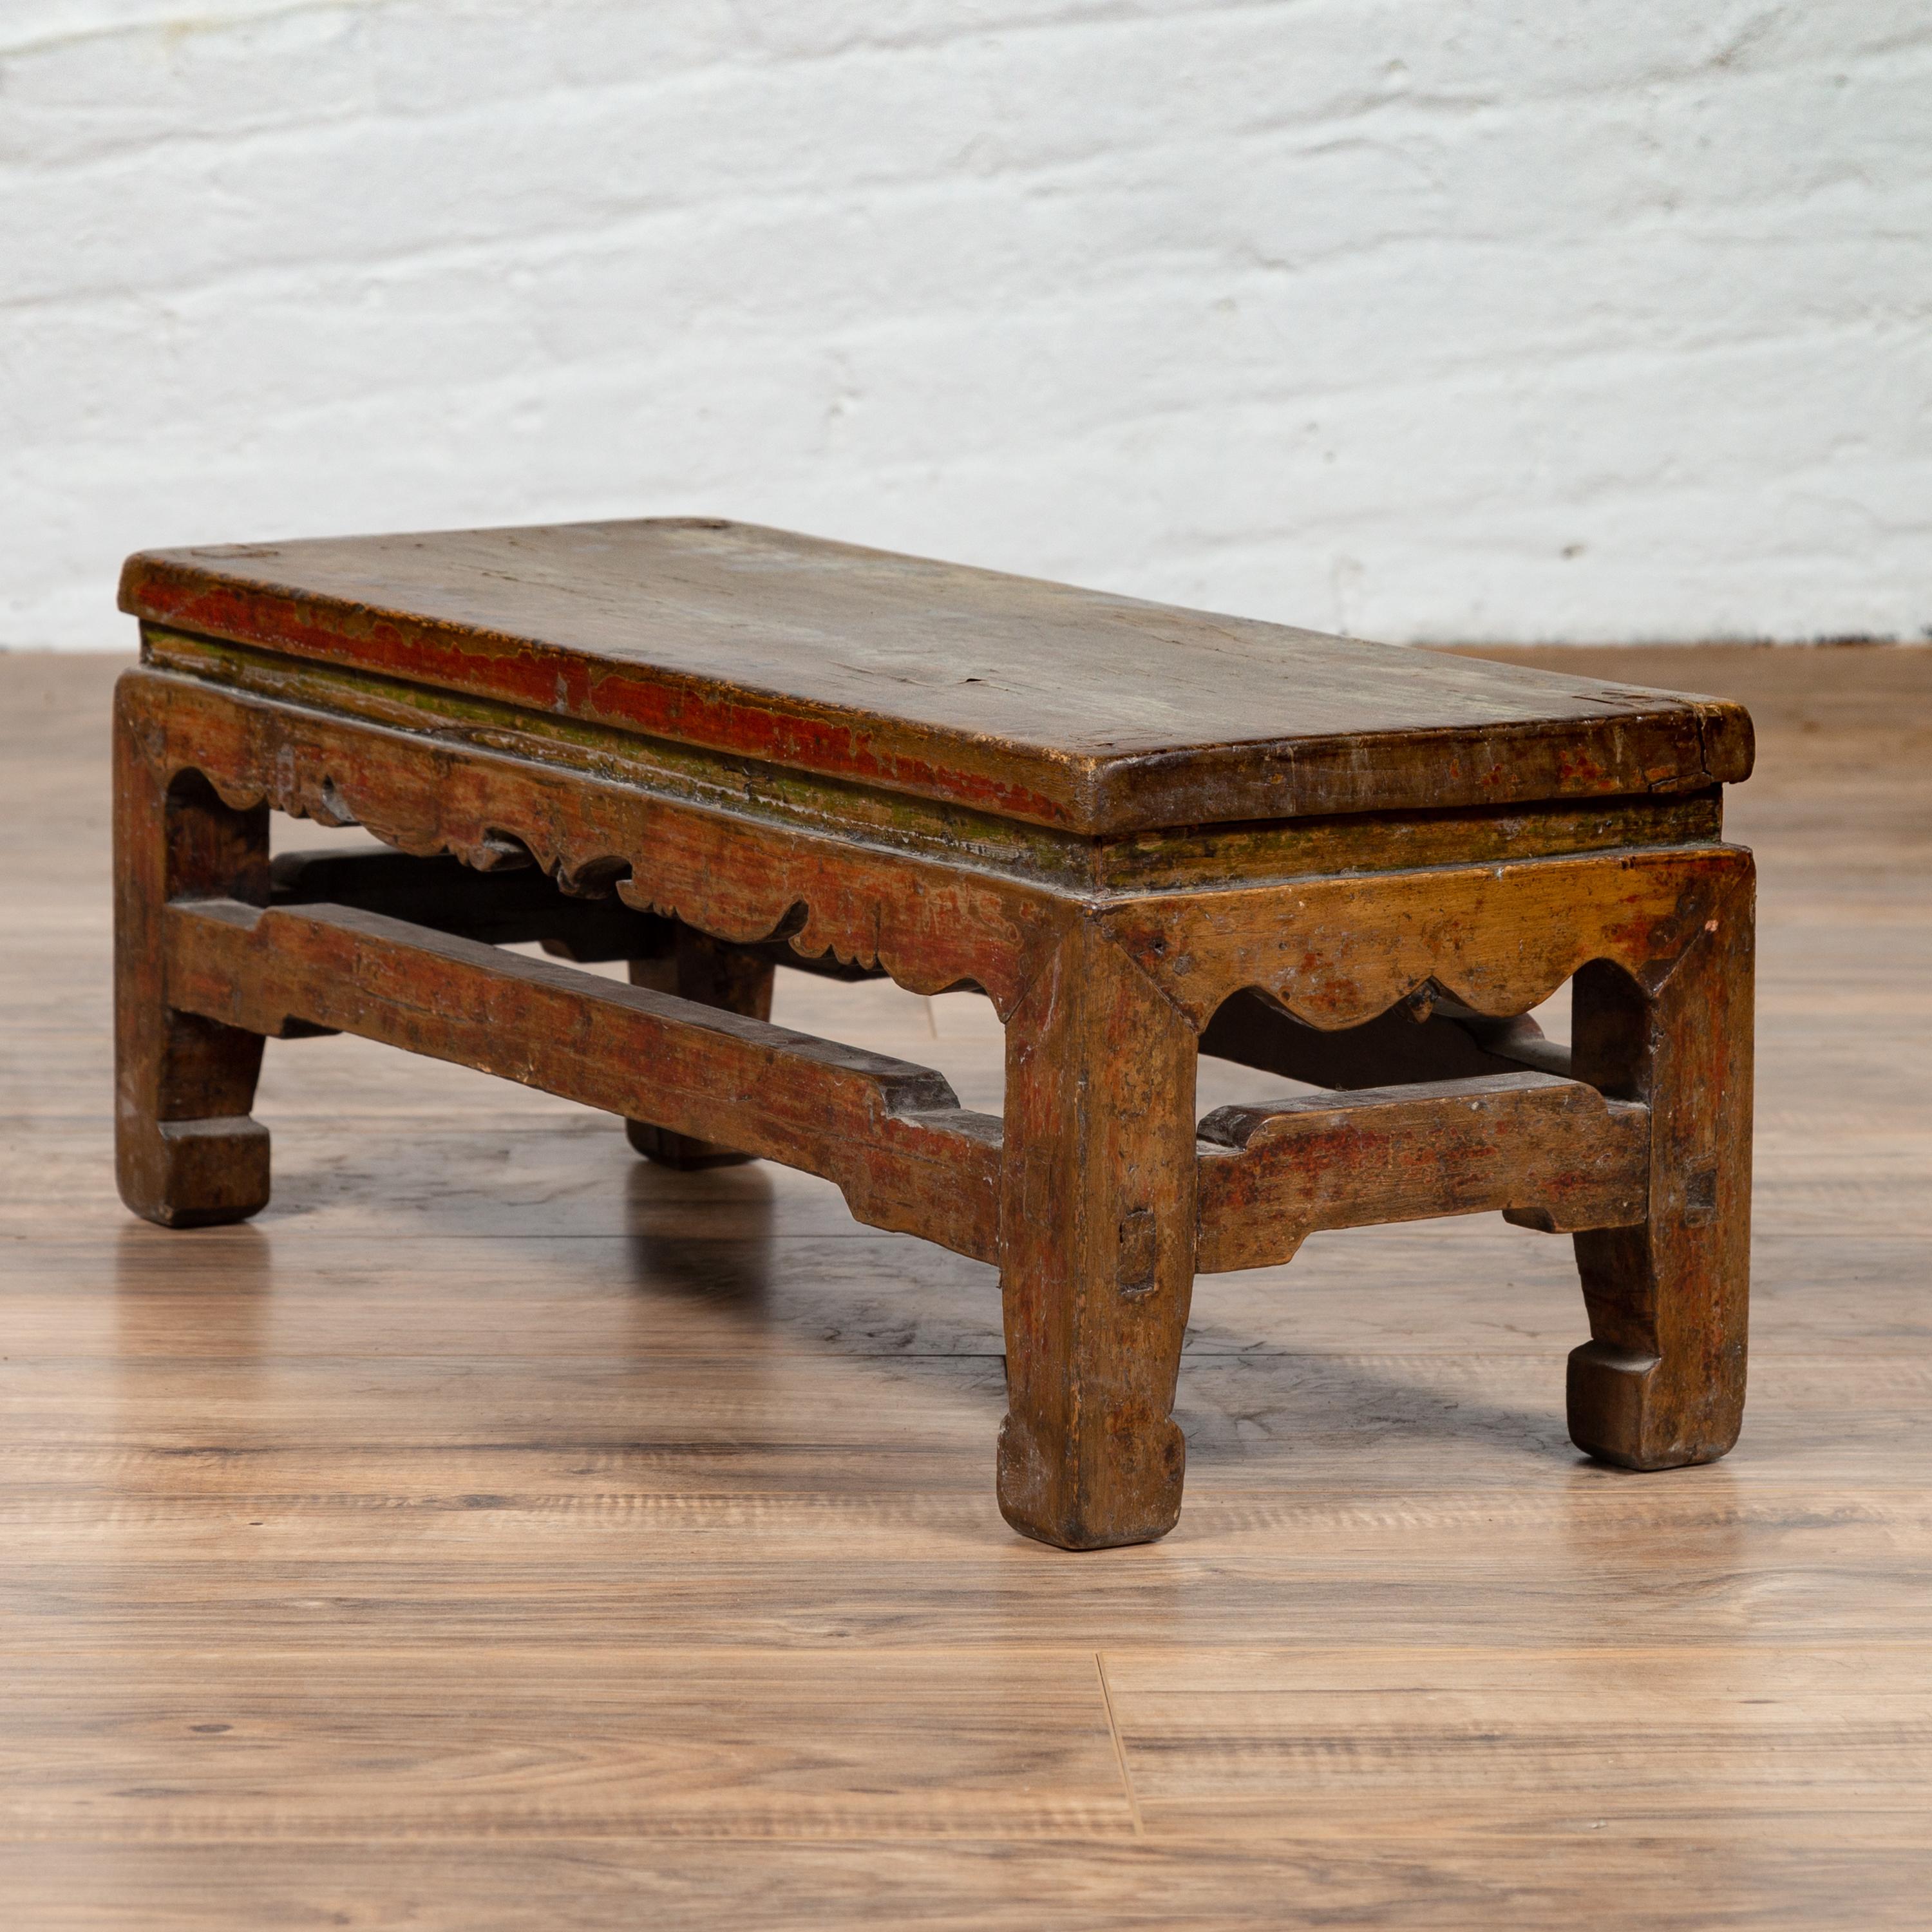 Wood Chinese Primitive Low Prayer Table with Multi-color Underglaze Design circa 1800